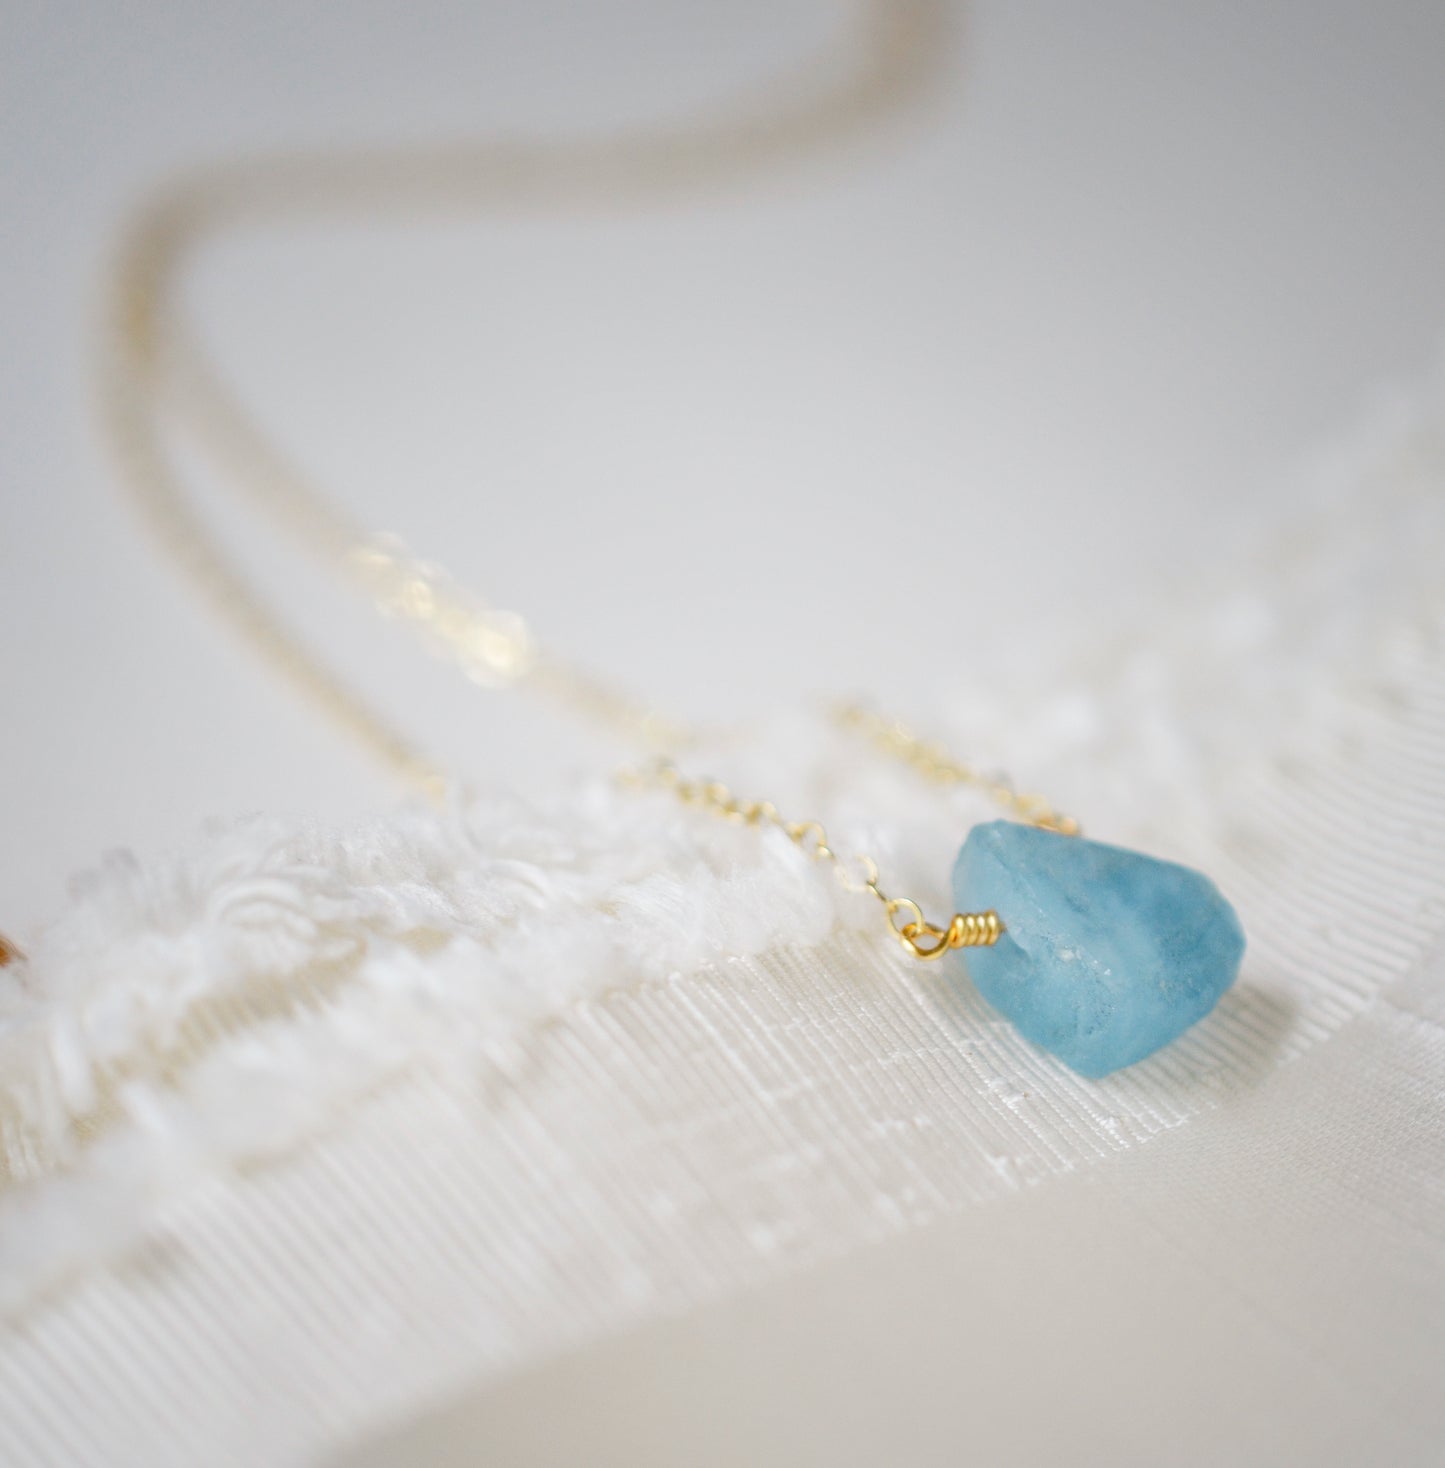 Aquamarine Necklace, Raw Crystal Aquamarine Pendant, Blue Stone Necklace, Something Blue, Blue Bridesmaid Jewelry, Sterling Silver, Gold 